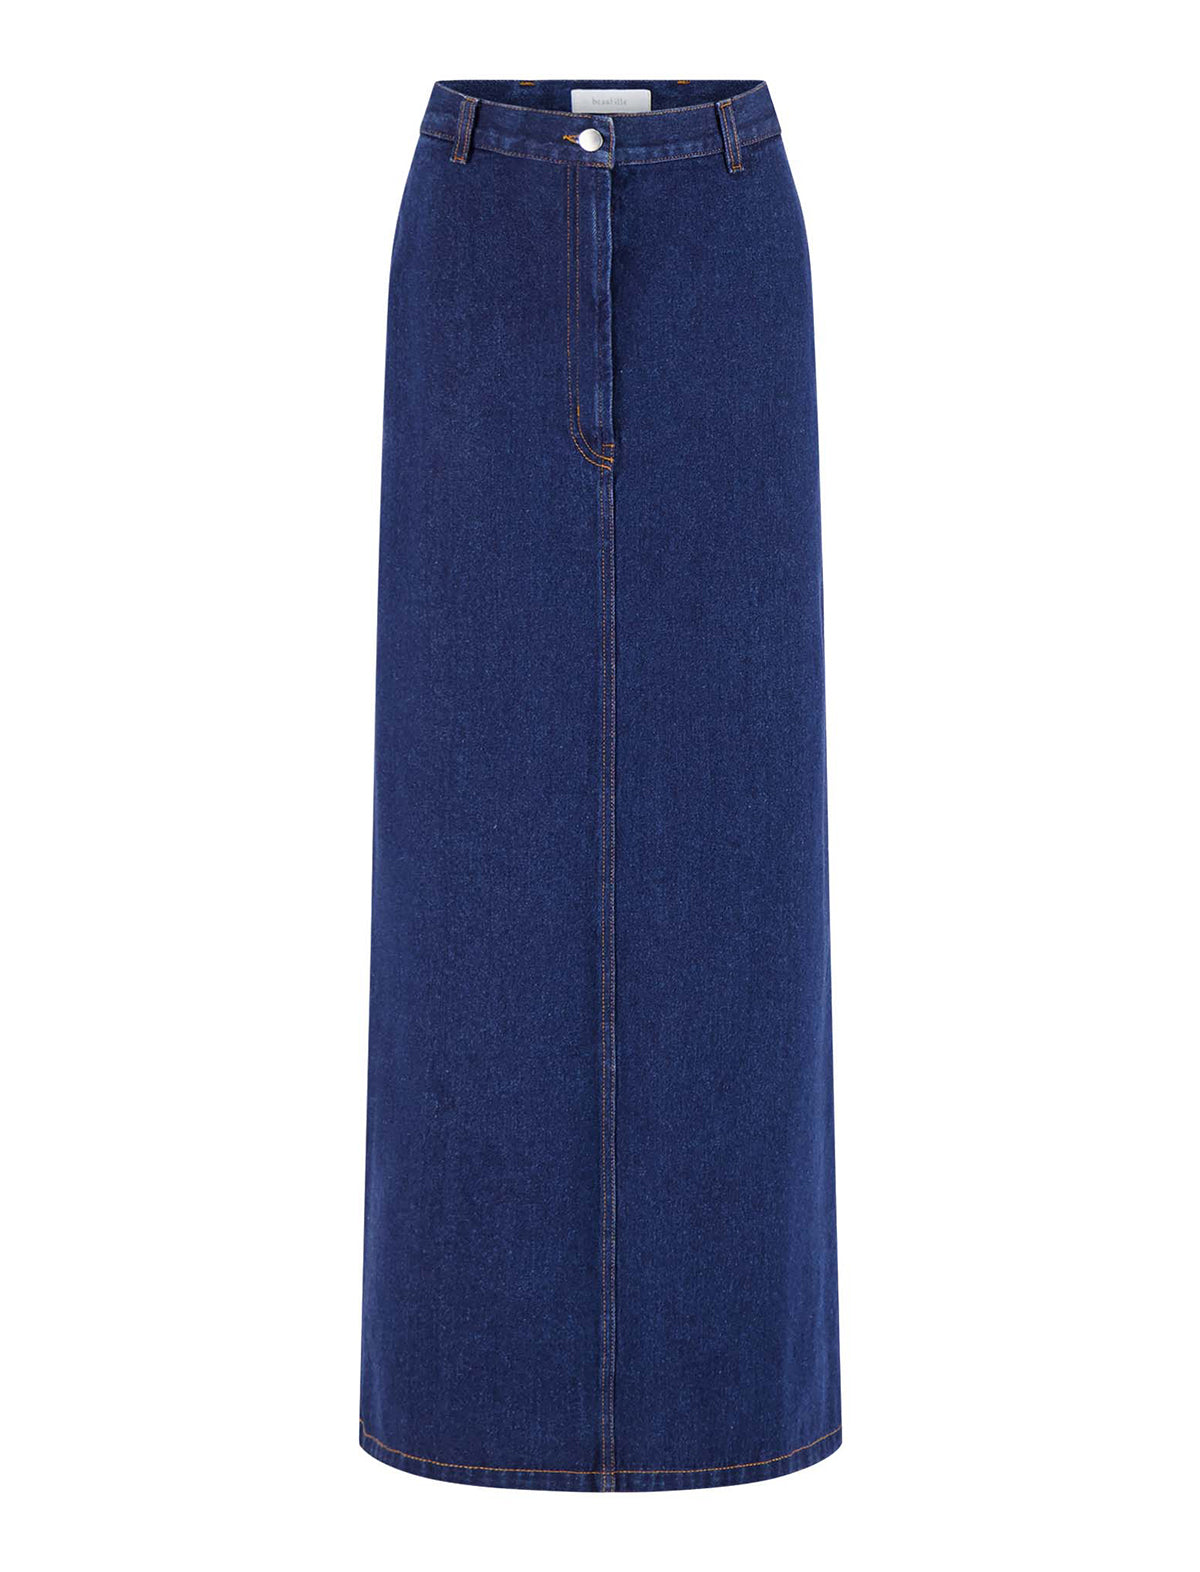 BEAUFILLE Minter Denim Skirt in Blue Wash